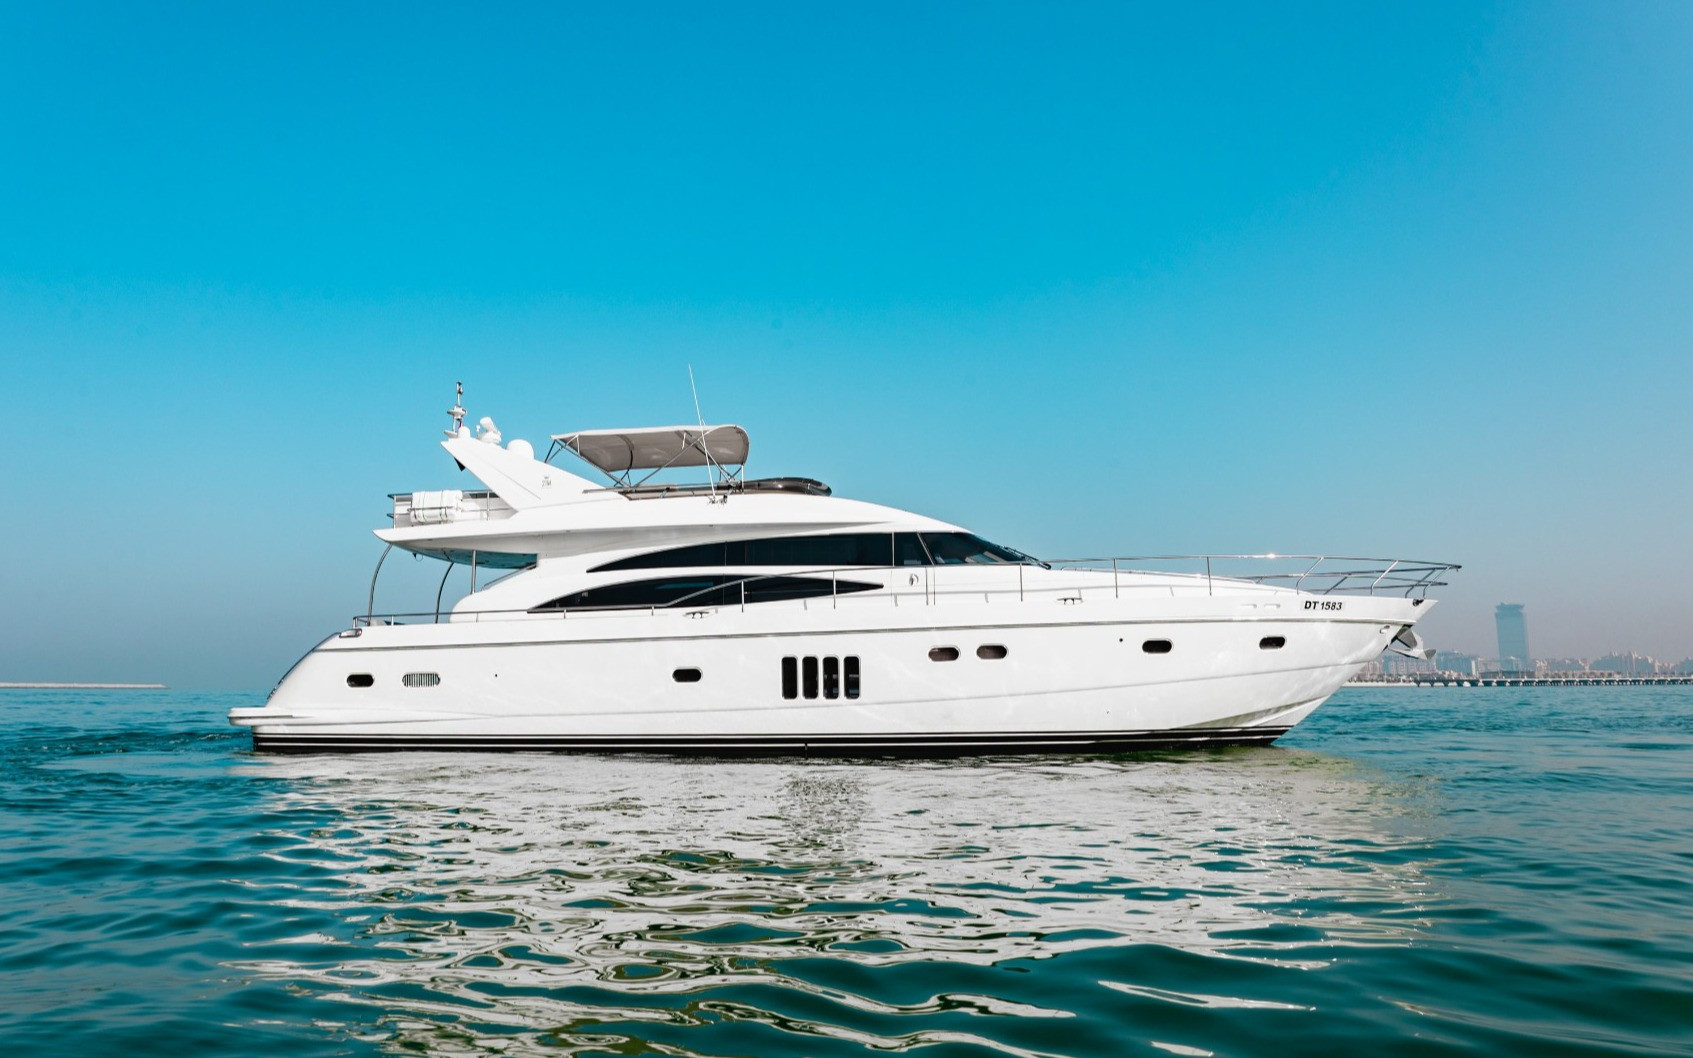 Power boat Amotea 72 ft in Dubai Harbour for rent in Dubai